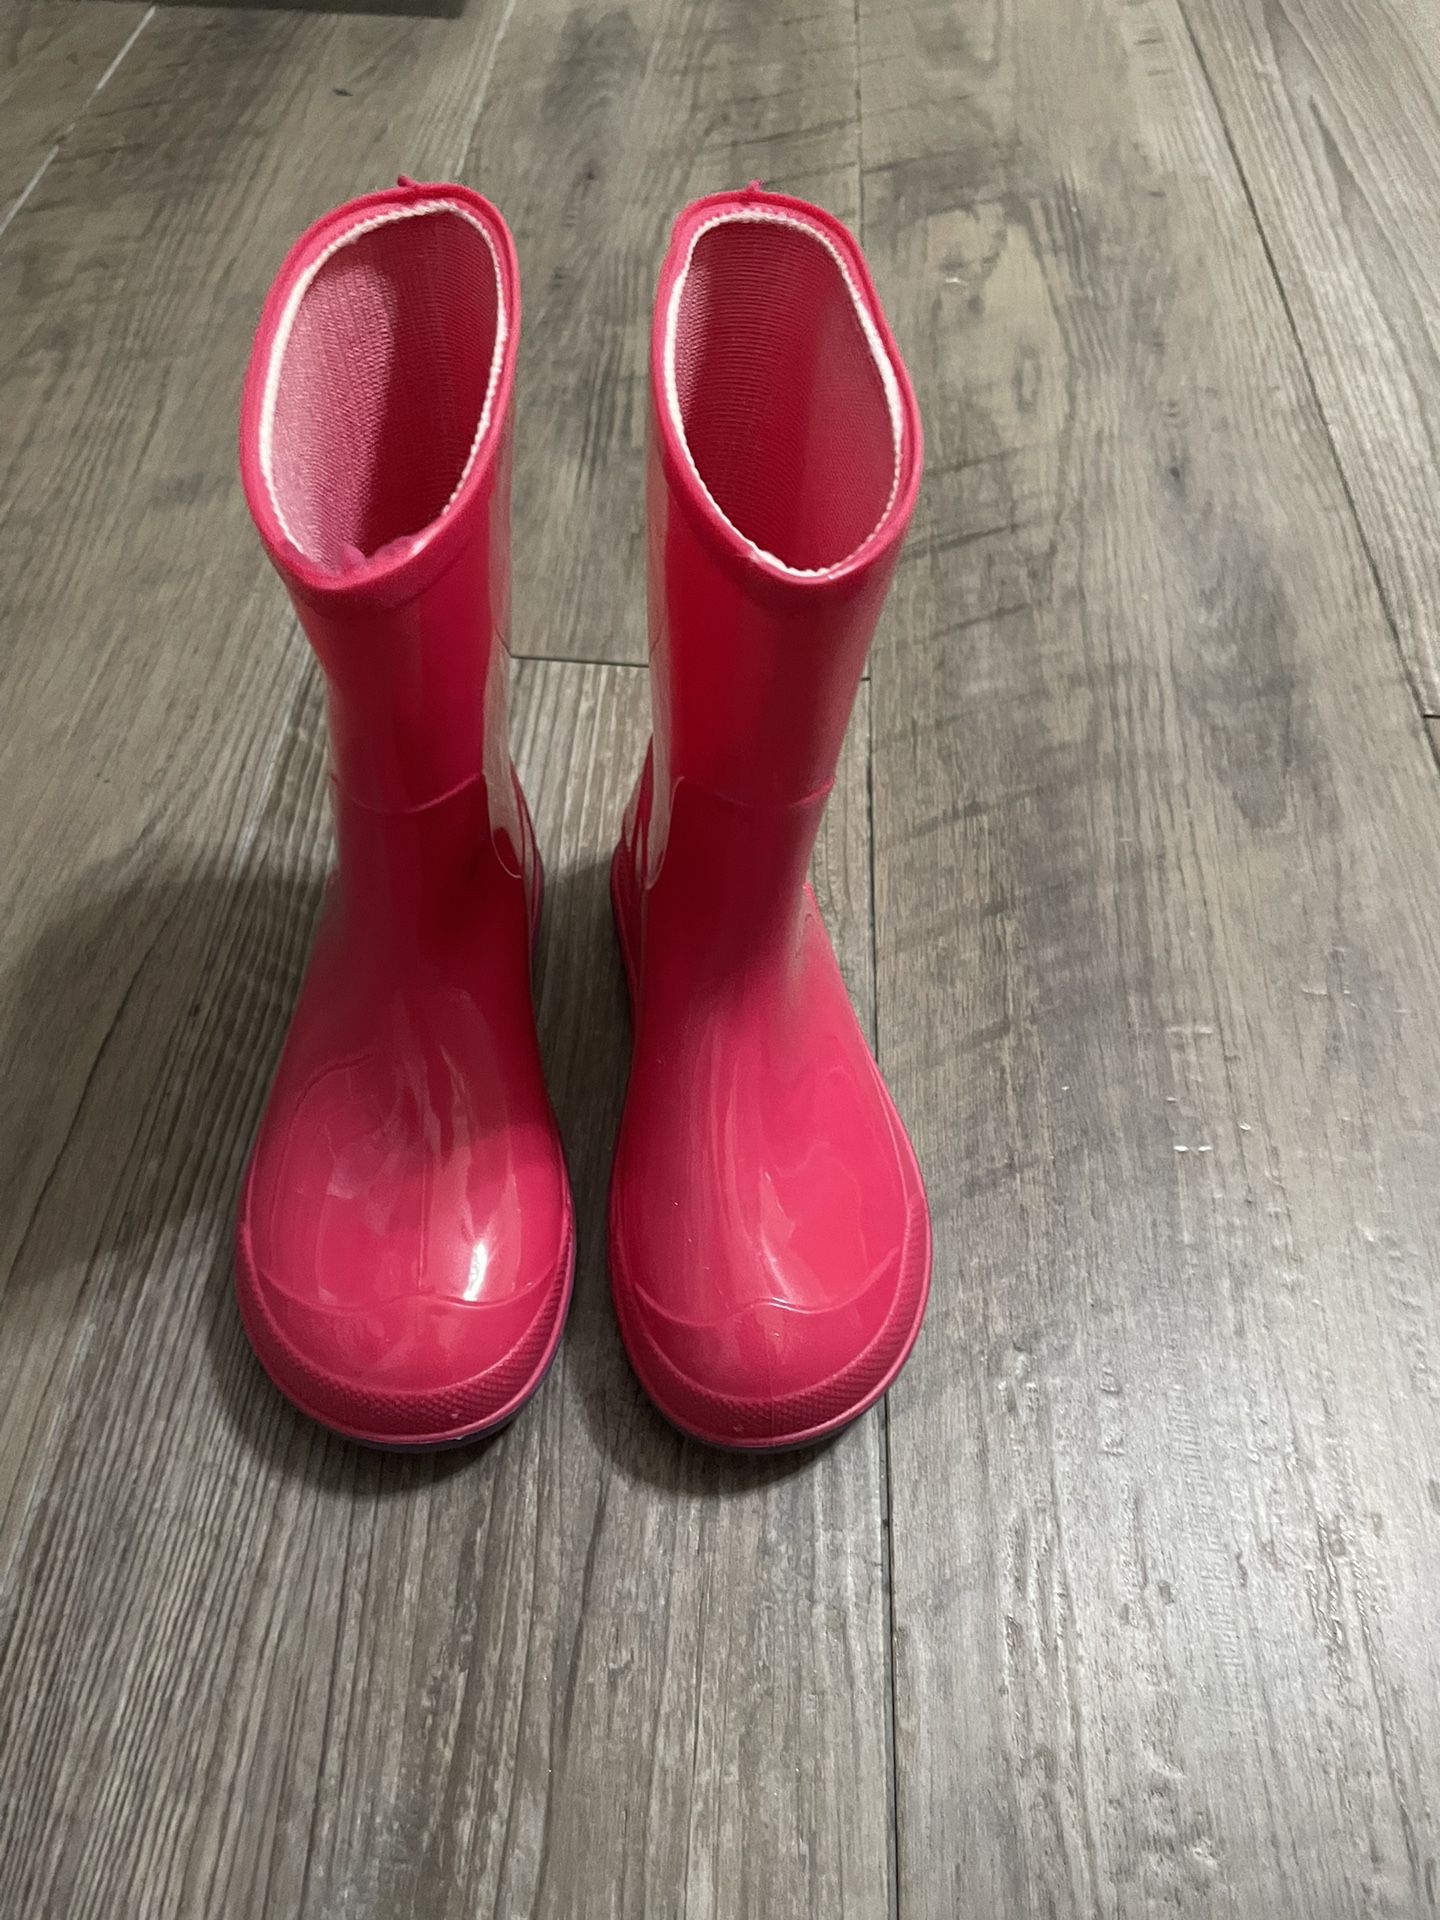 Girls Rain Boots-New!